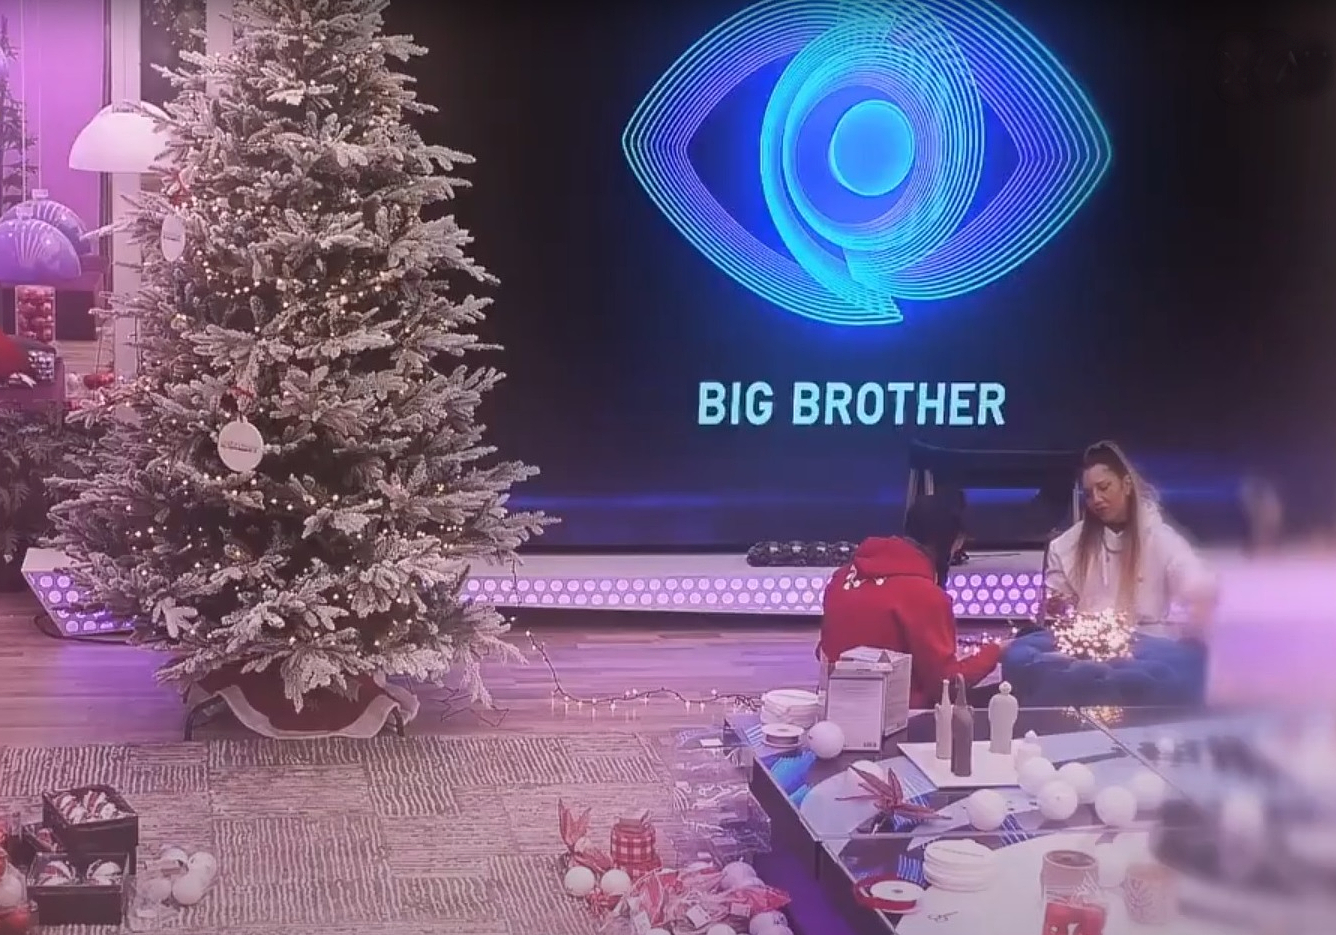 Big Brother spoiler 2/12: Χριστουγεννιάτικο το κλίμα στο σπίτι του Big Brother [trailer]